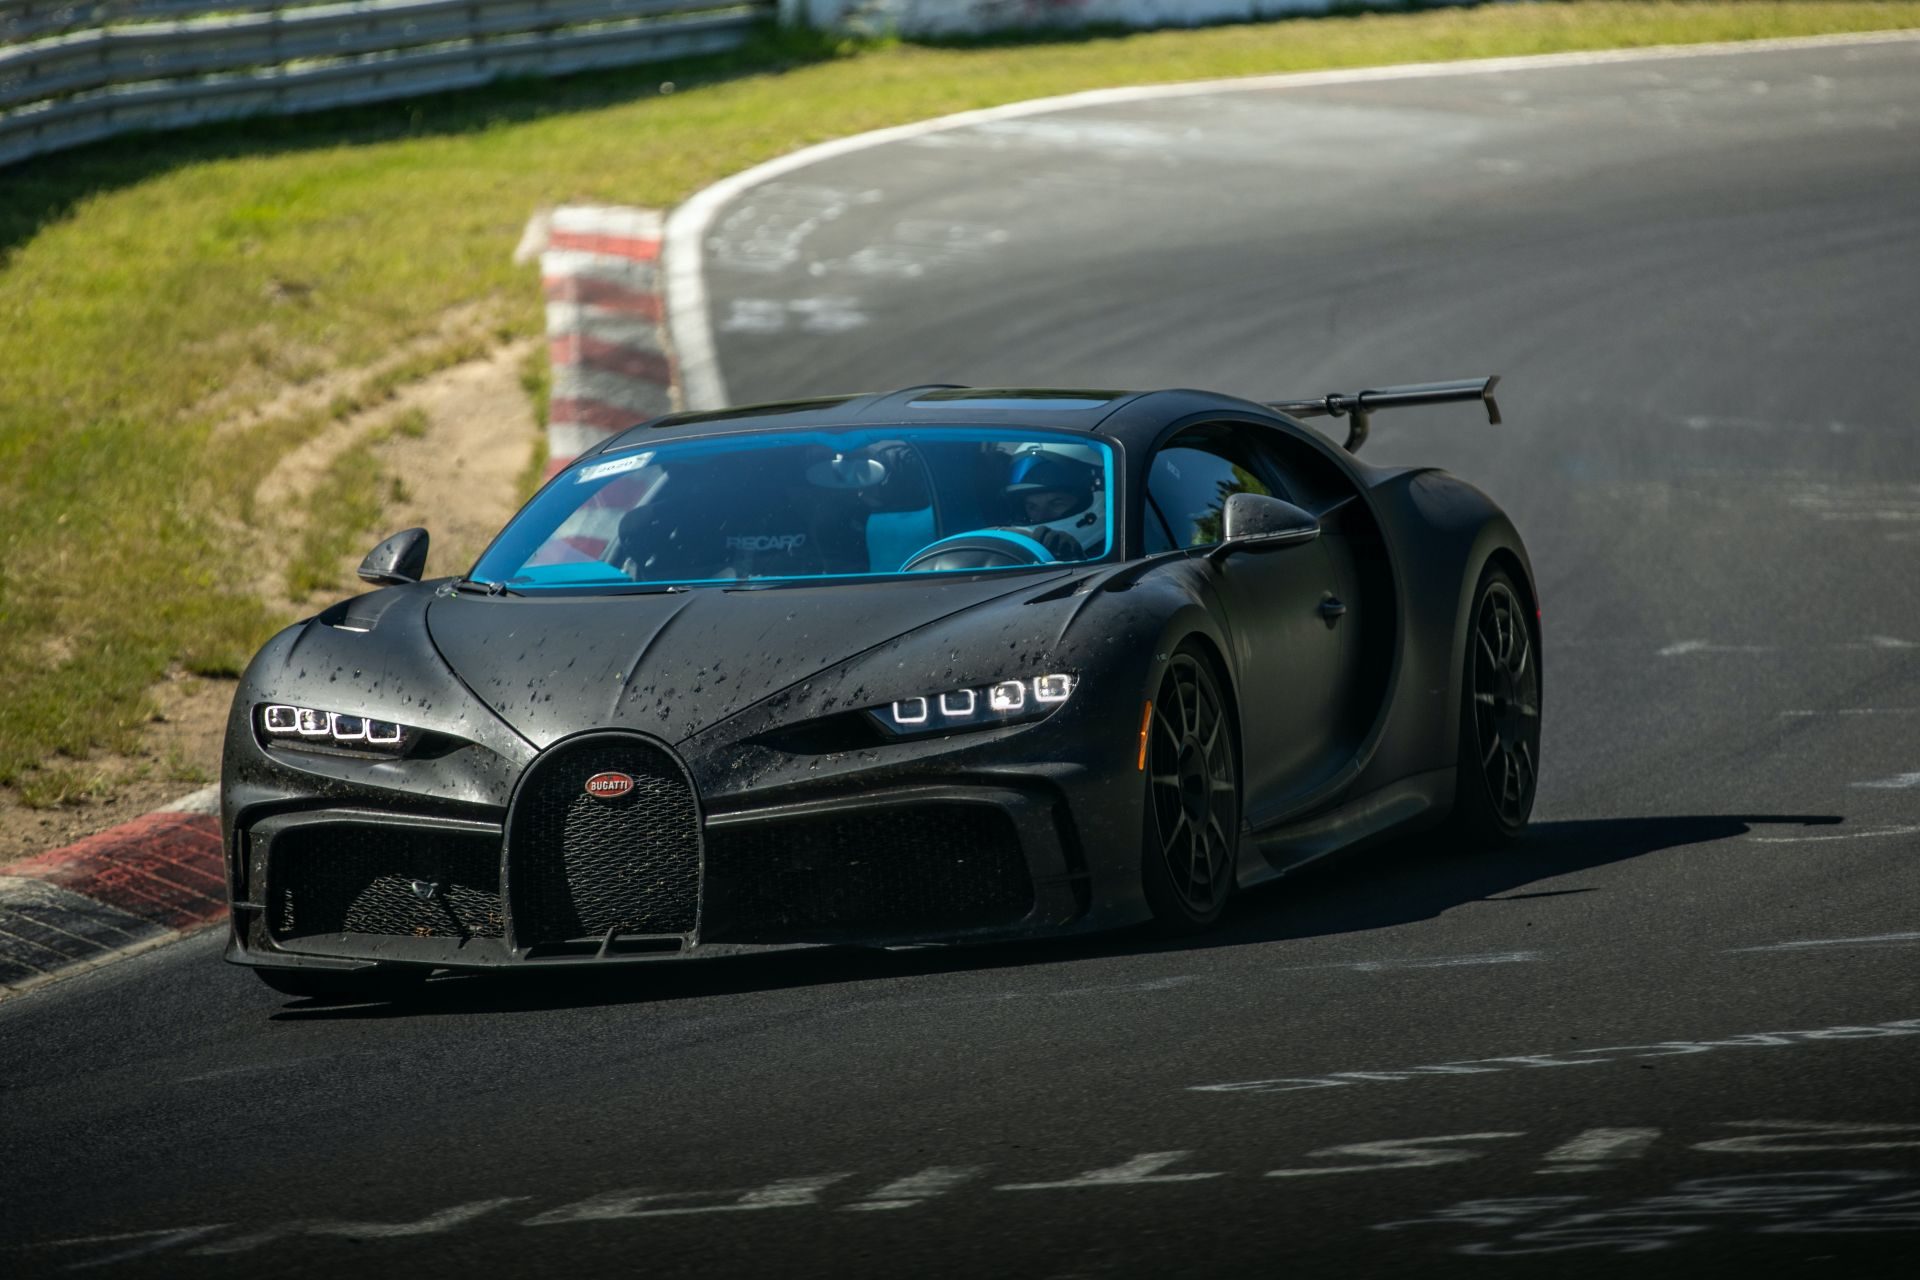 Bugatti-Chiron-Pur-Sport-final-testing-at-the-Nurburgring-Nordschleife-3.jpg